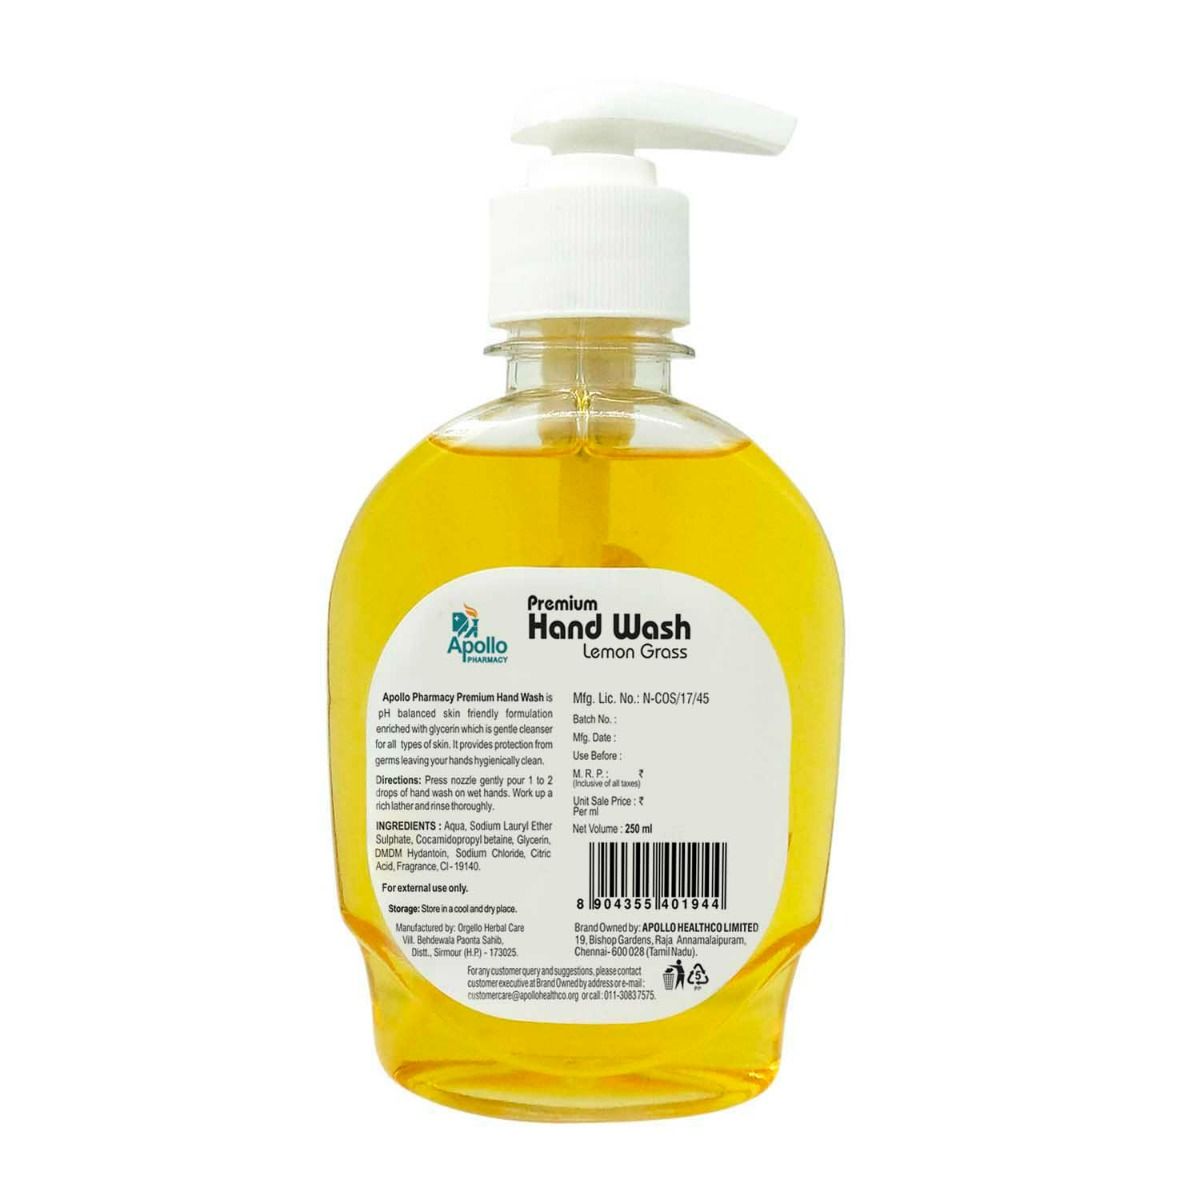 Apollo Pharmacy Premium Lemon Grass Handwash, 250 ml, Pack of 1 